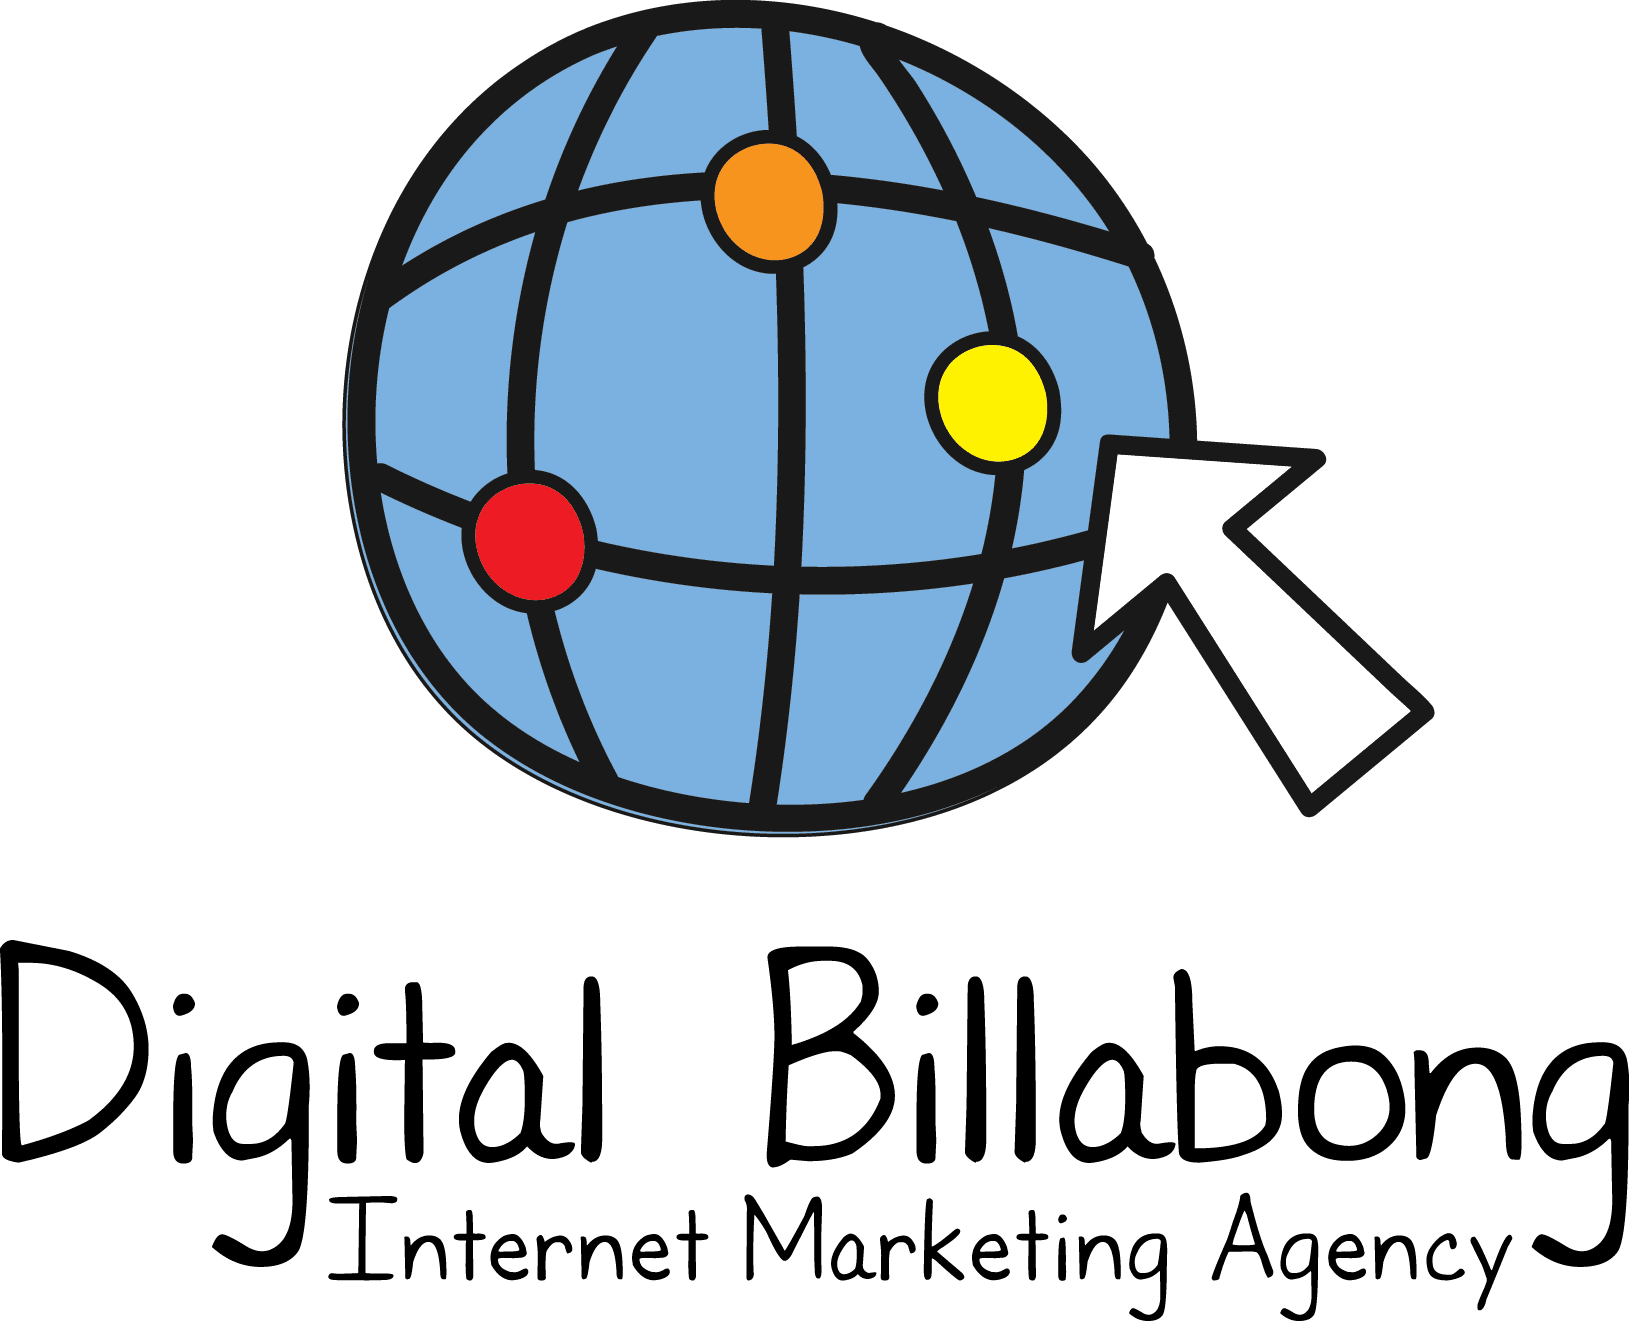 Digital billabong logo